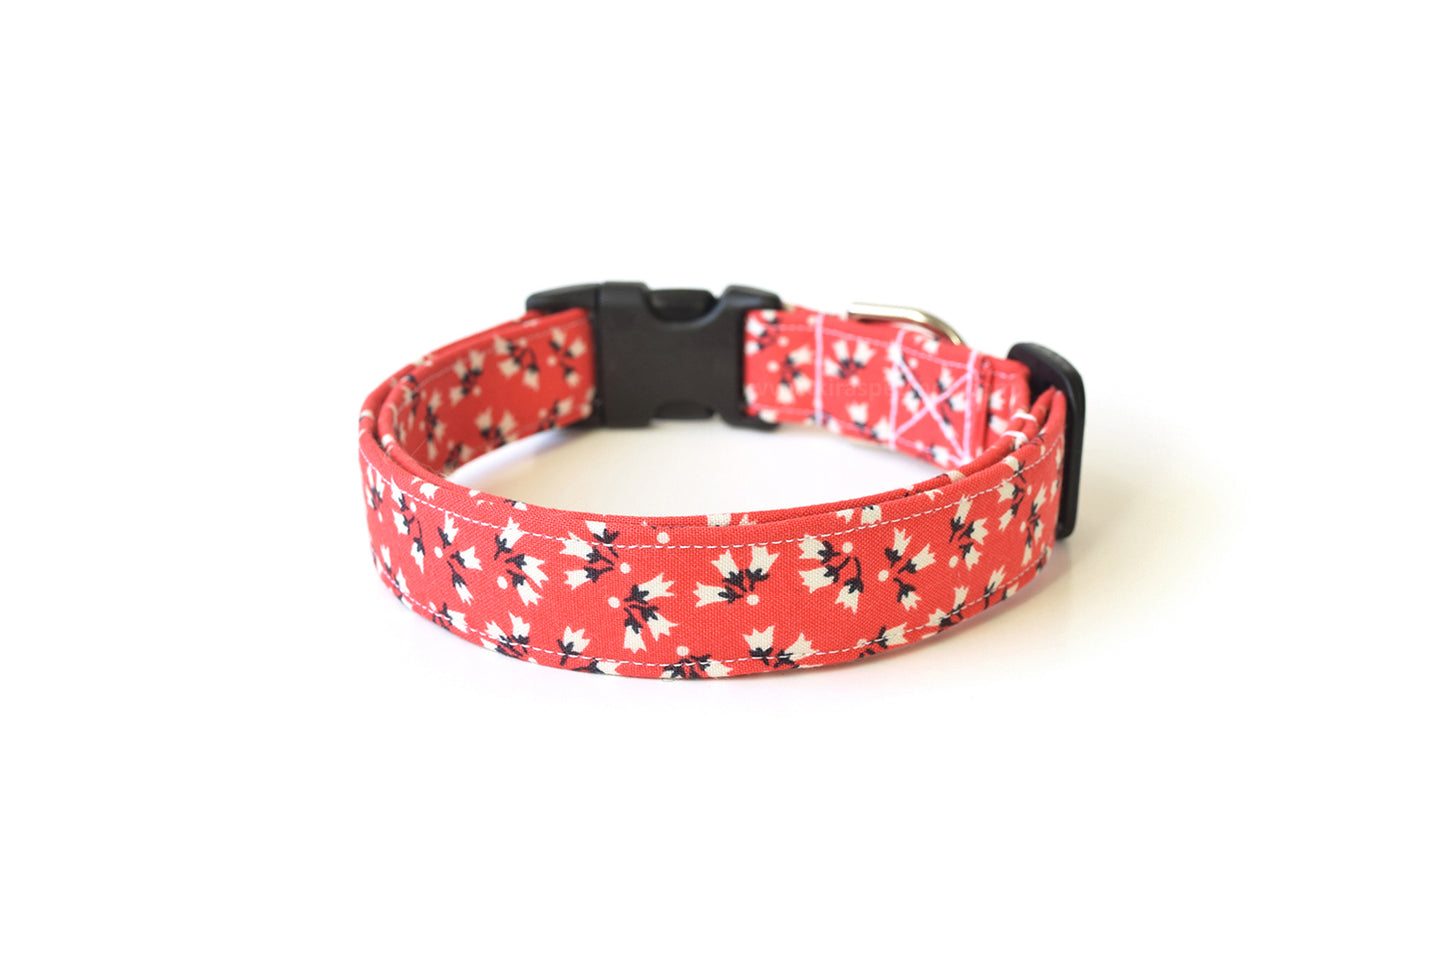 Salmon Pink Floral Dog Collar - Handmade by Kira's Pet Shop